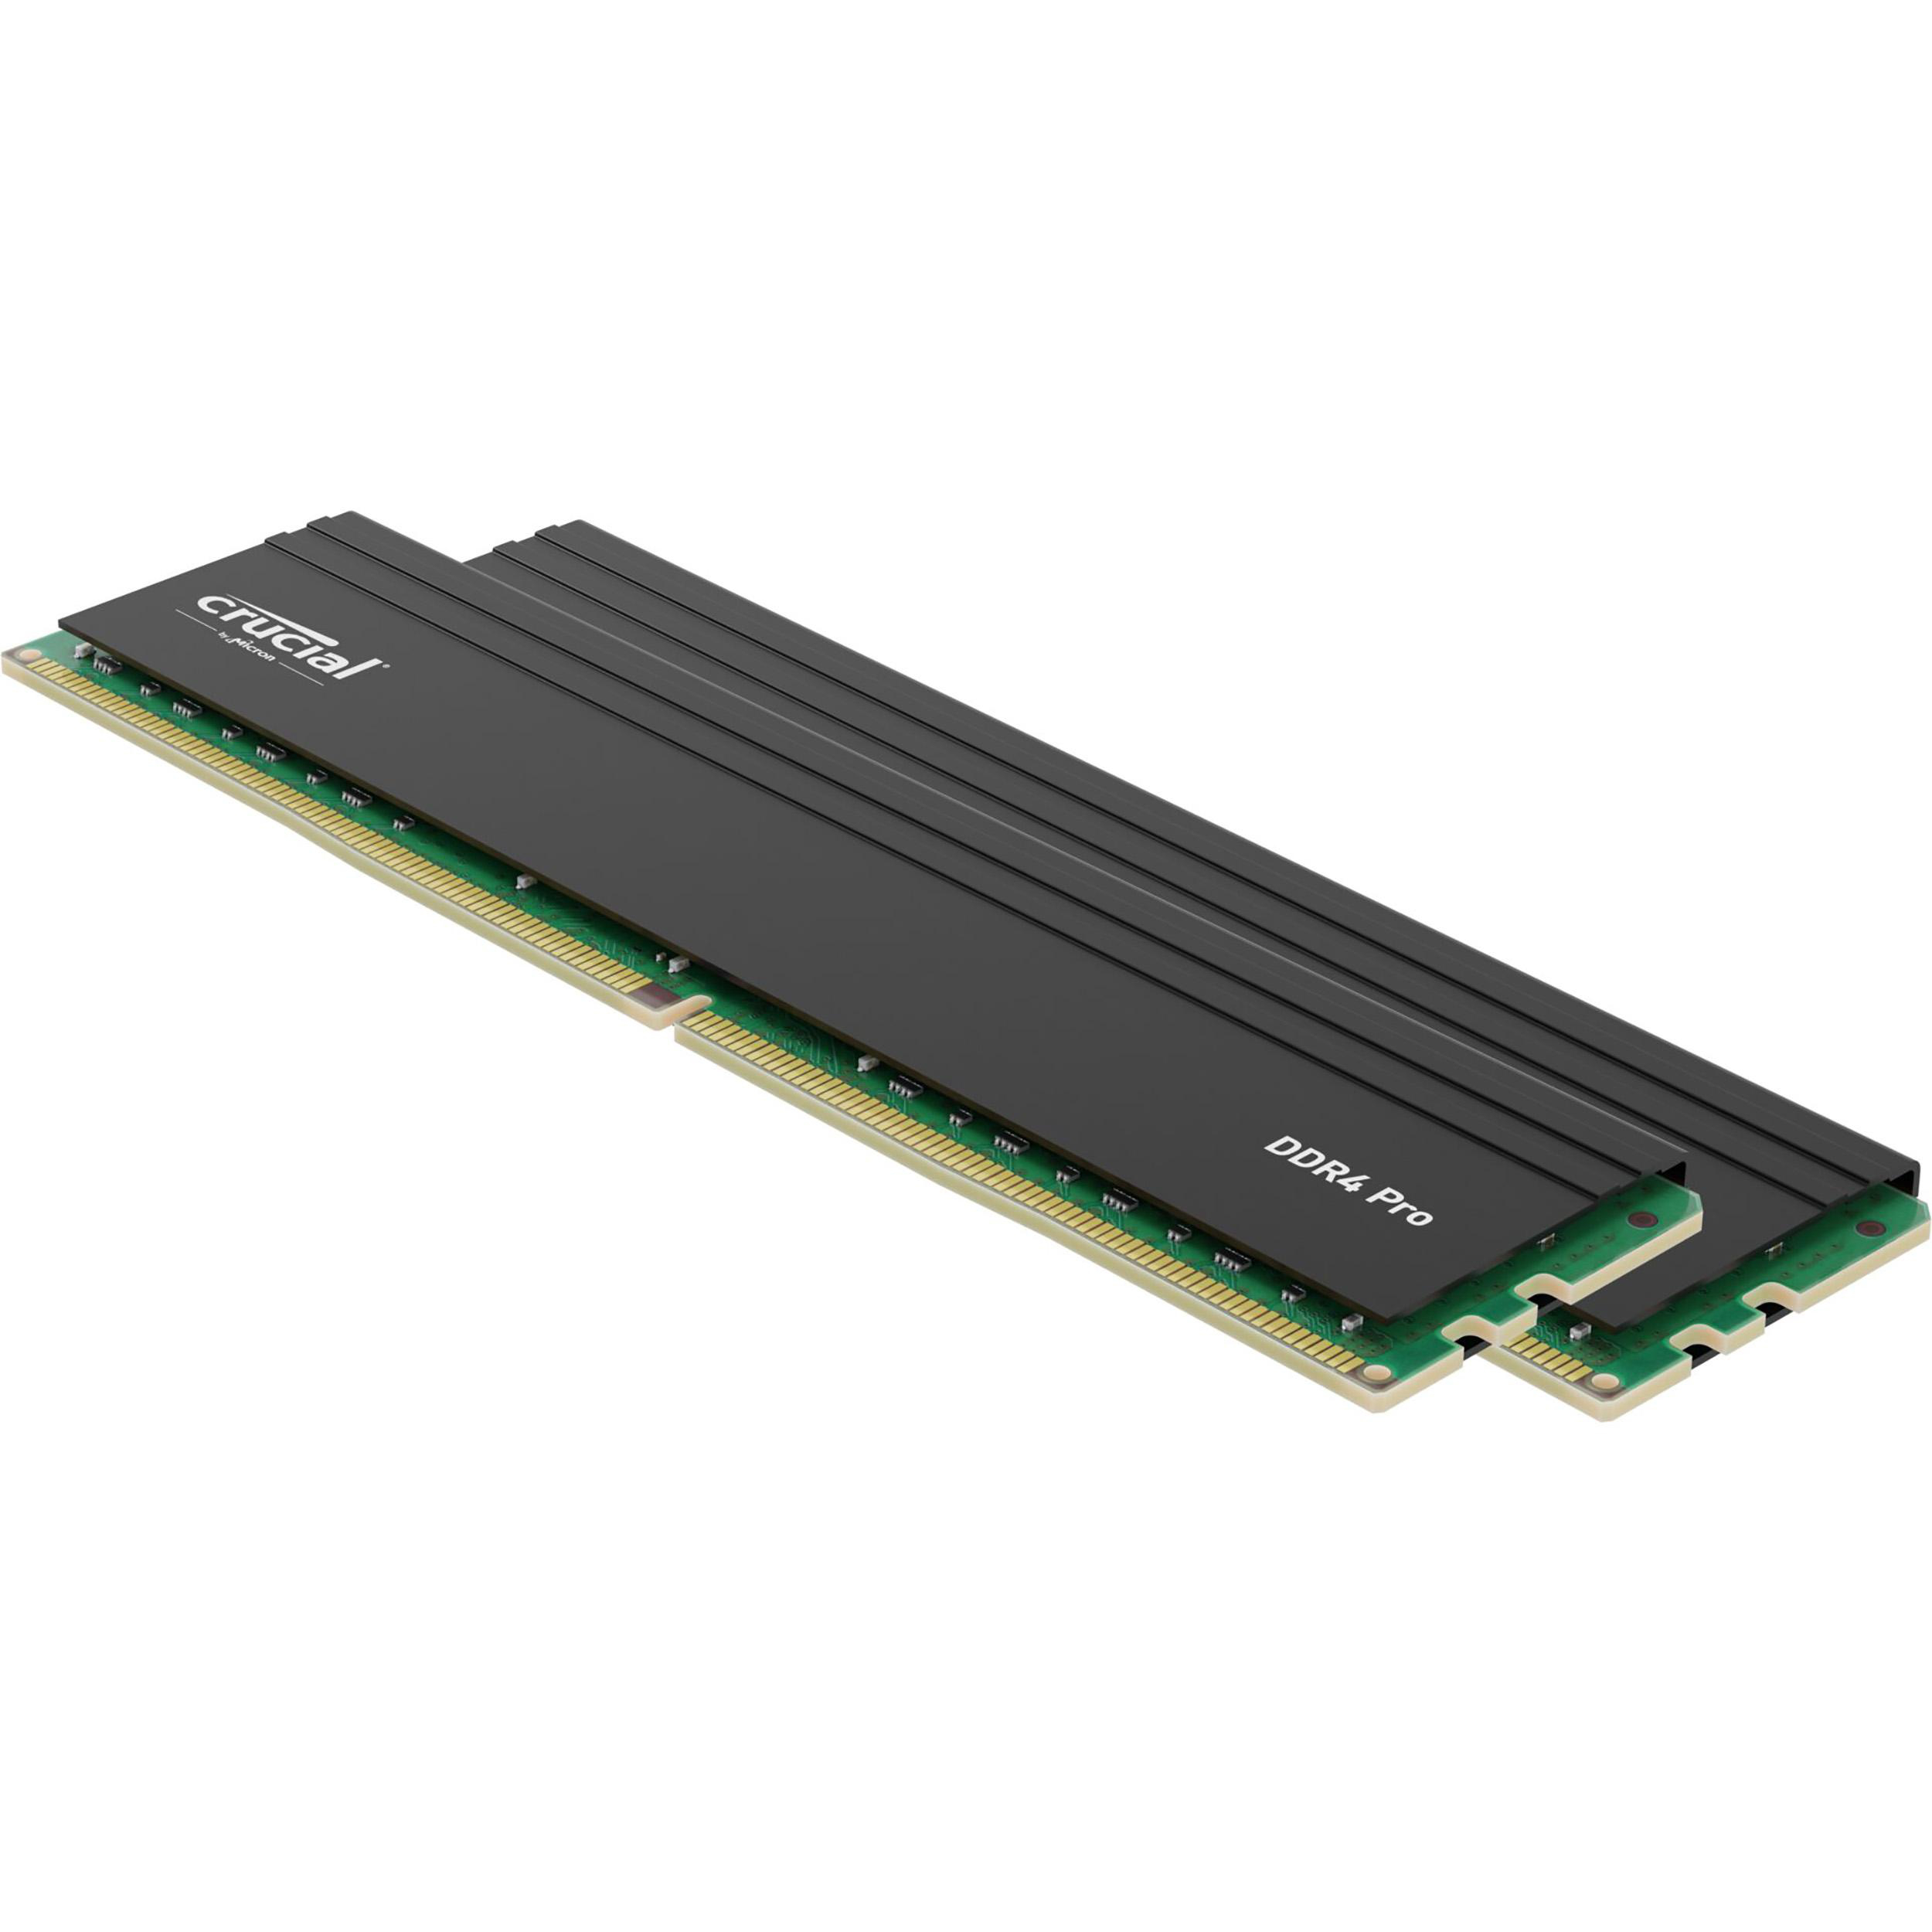 CRUCIAL Pro DDR4-3200 GB DDR4 PC Kit Arbeitsspeicher 32